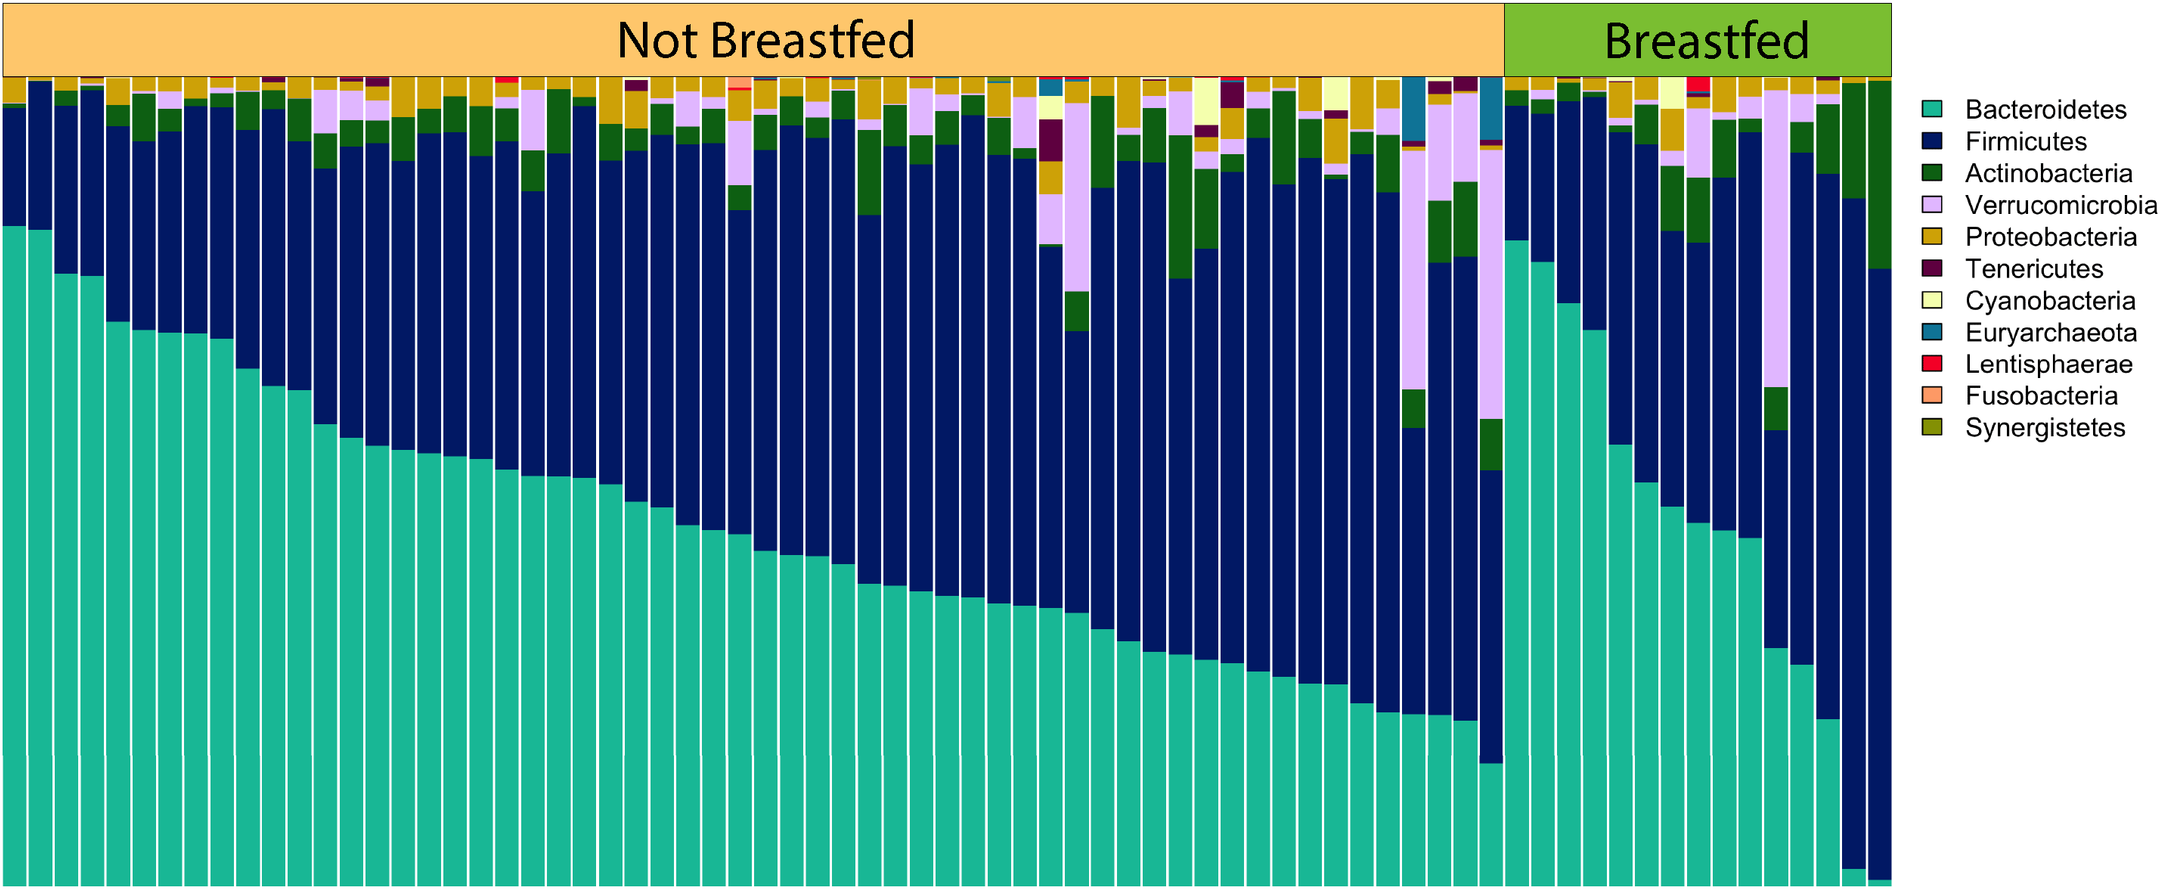 HIstory of breastfeeding